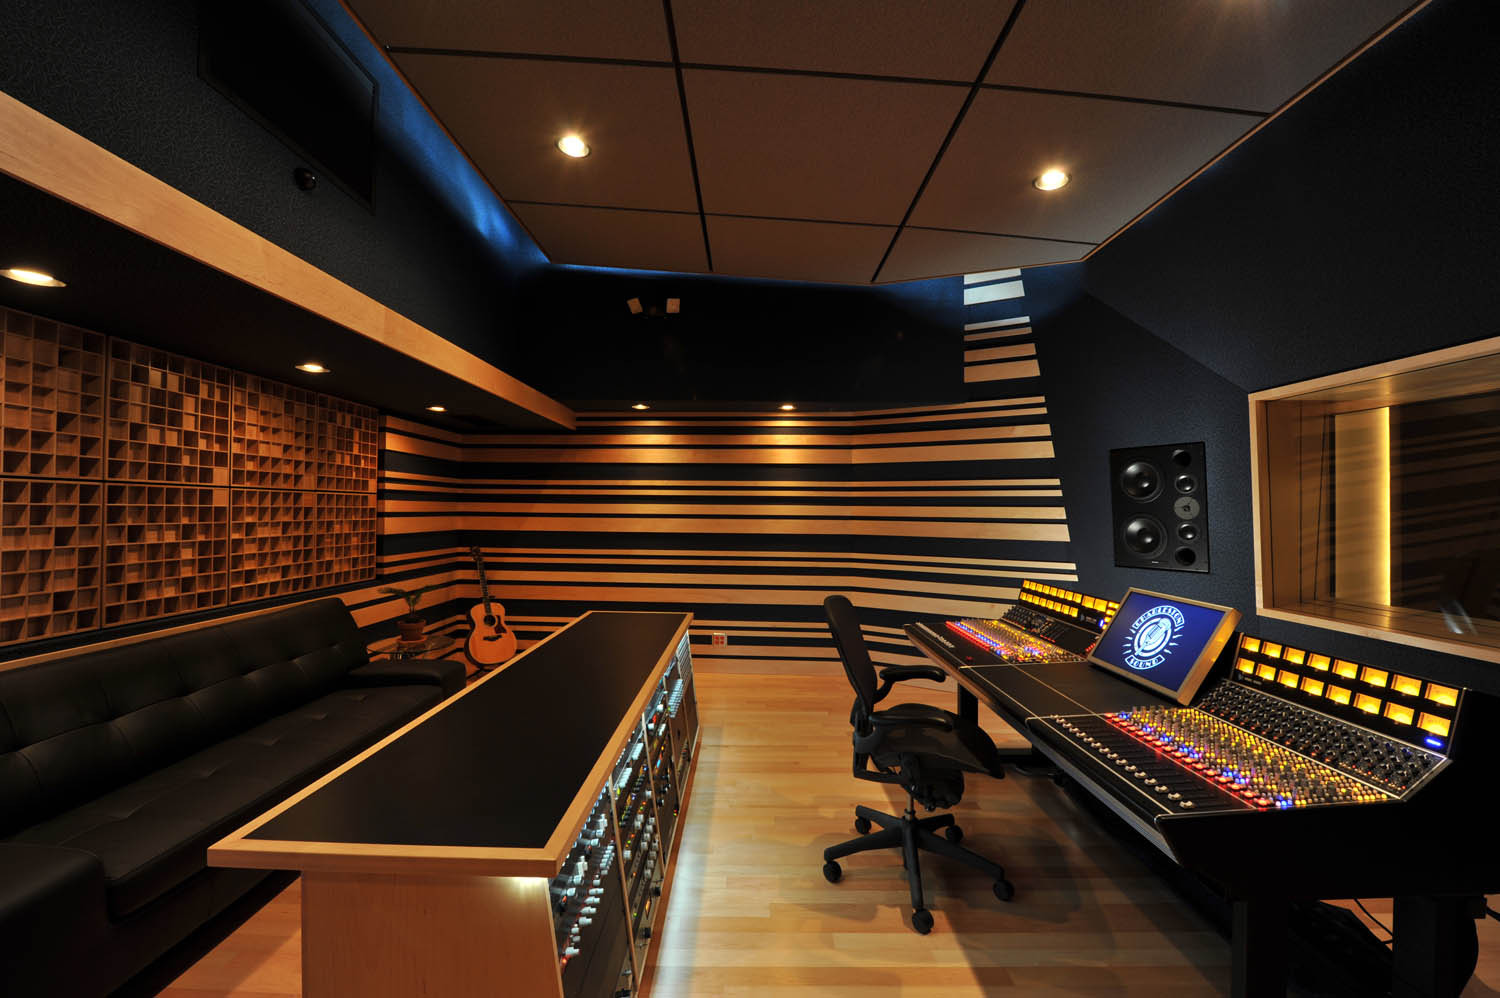 recording studio console clean | Boas dicas do Des McKinney.